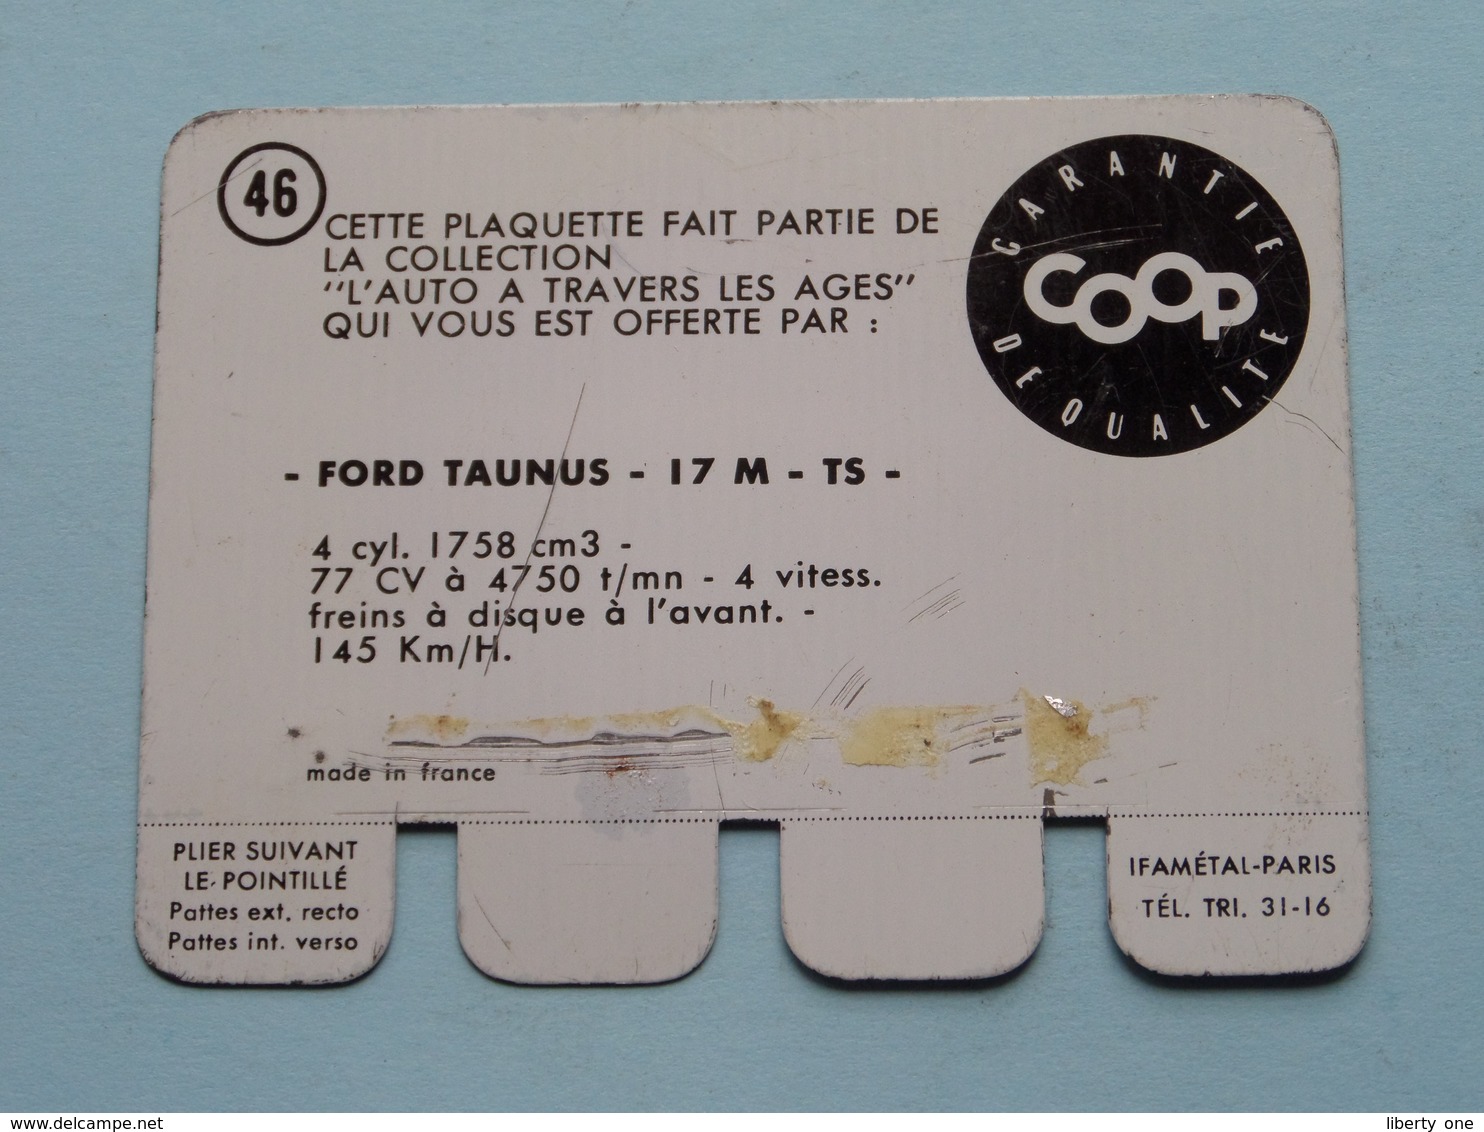 FORD TAUNUS 17 M TS - Coll. N° 46 ( Plaquette C O O P - Voir Photo - Ifamétal Paris ) ! - Tin Signs (after1960)